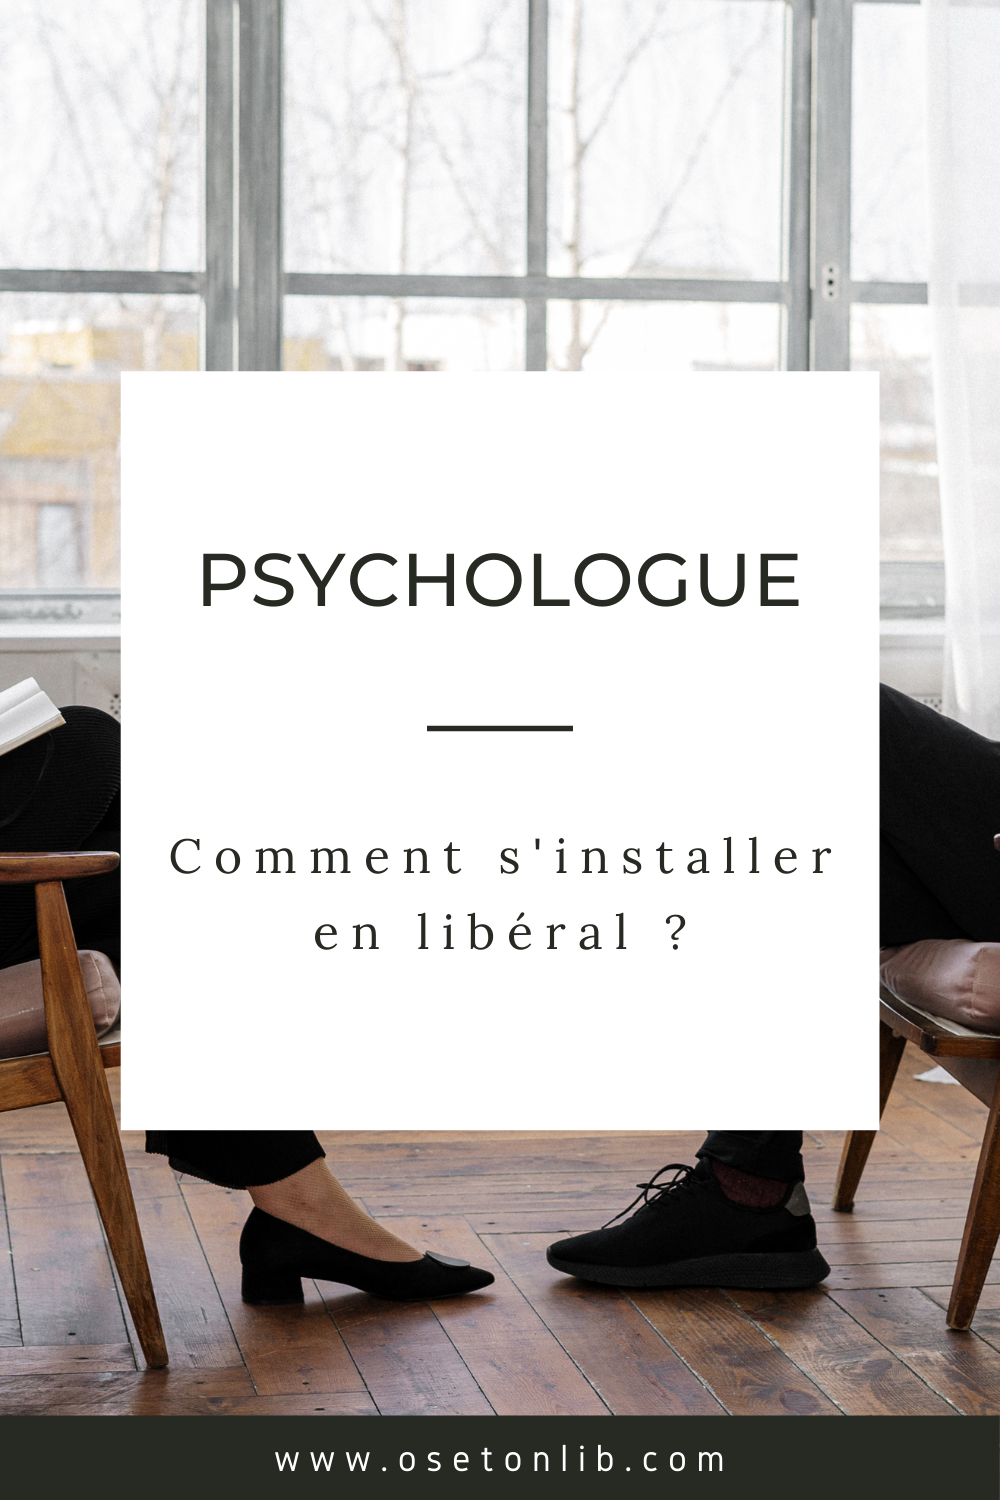 Psychologue : comment s’installer en libéral ?